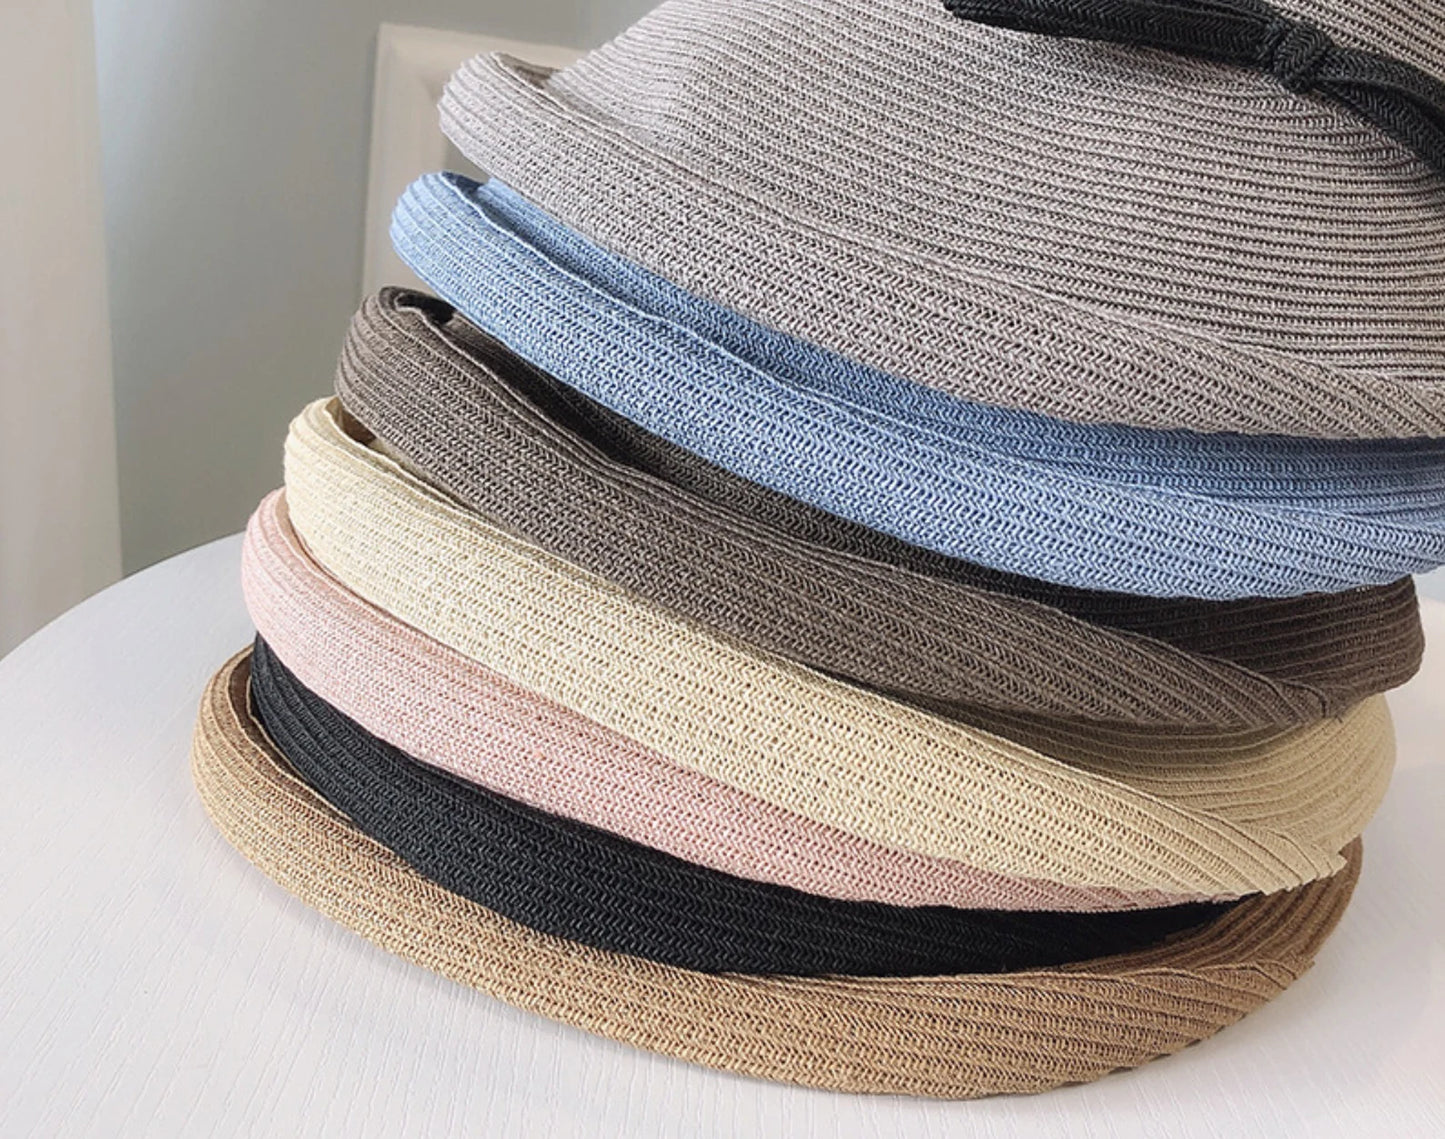 Hepburn Type Straw Hat, Retro Foldable Rolled Edge Straw Hat